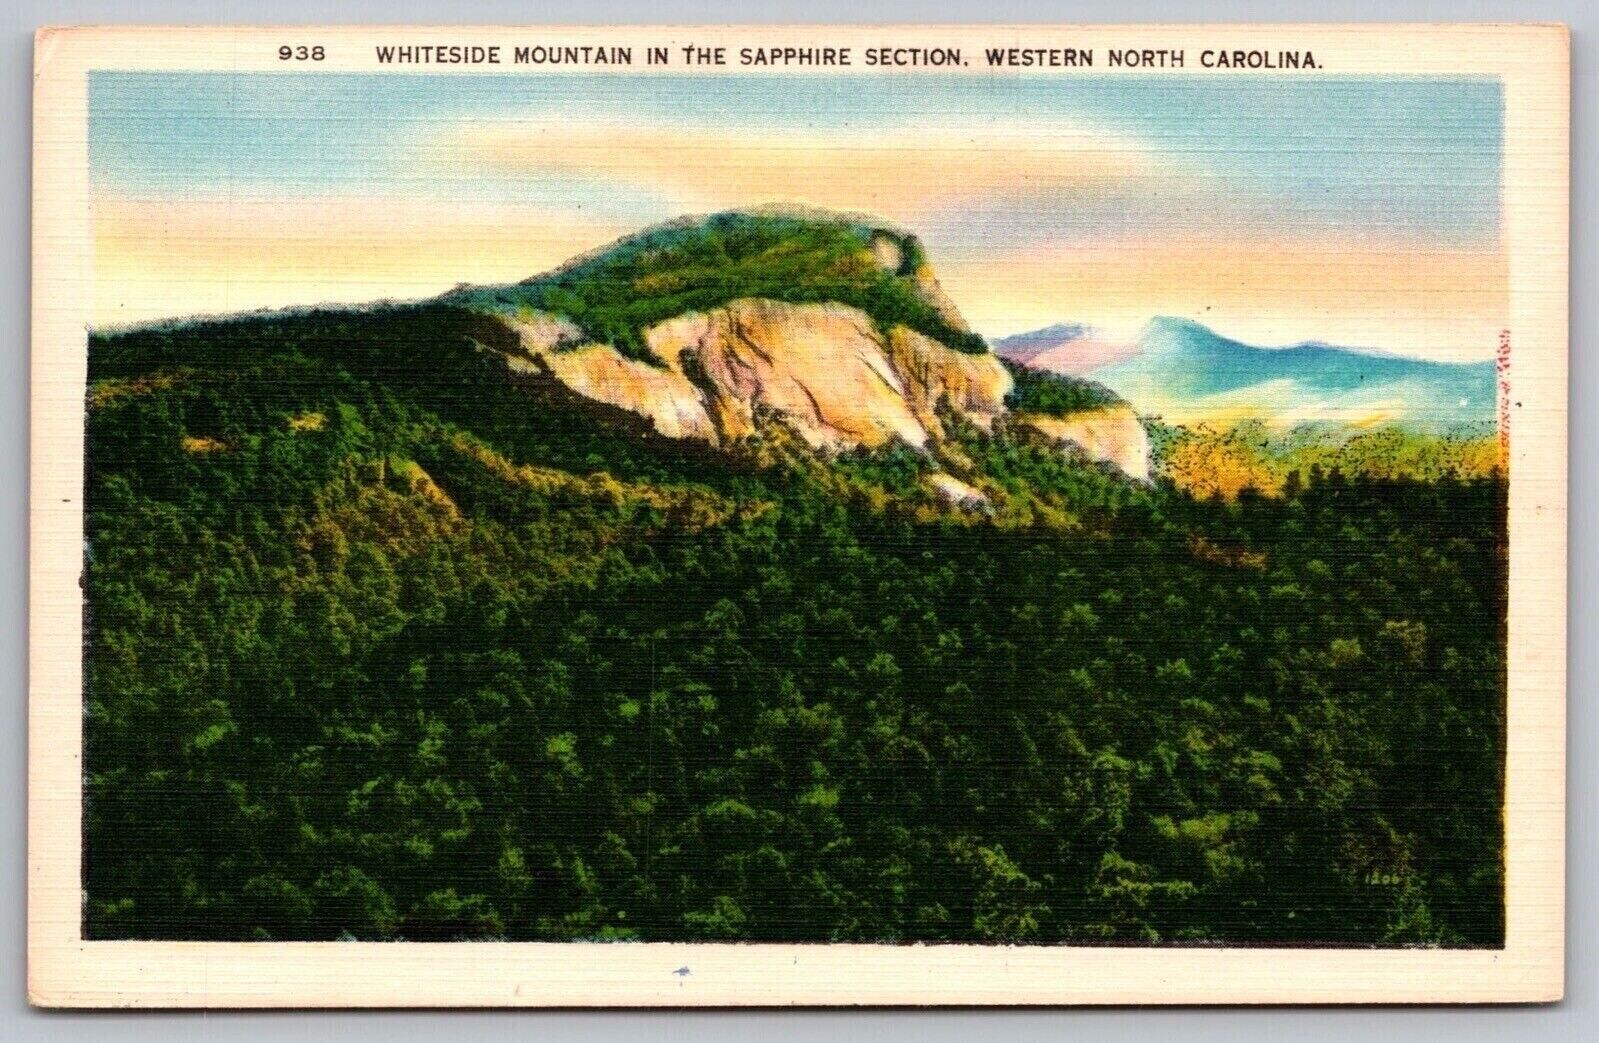 Whiteside Mountain Sapphire Section Western North Carolina Aerial View Postcard